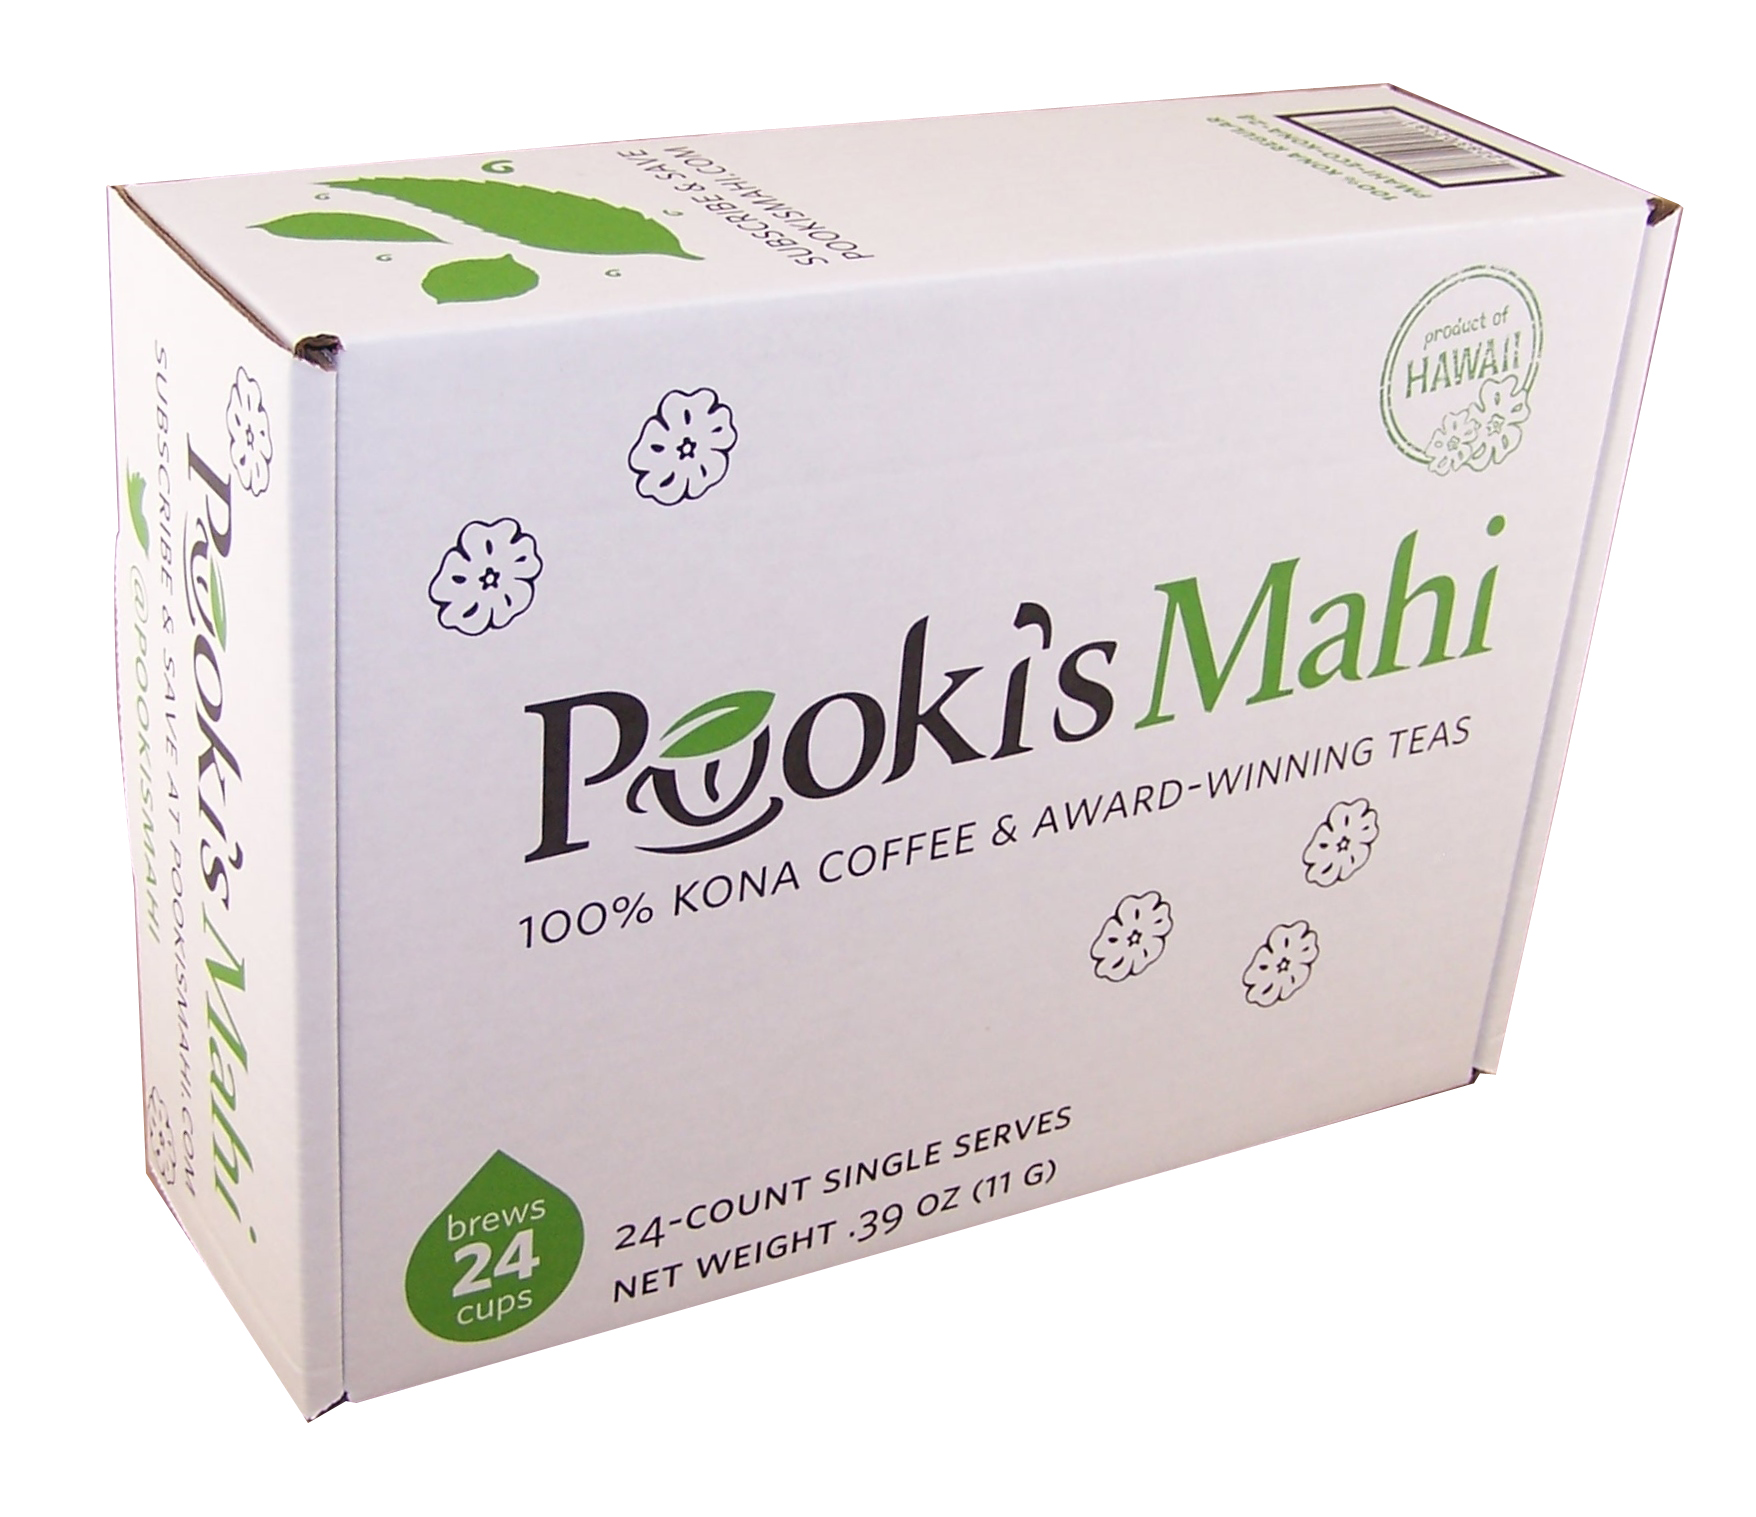 Pooki's Mahi's new environmentally packaging for 100% Kona coffee ECO Single Serve product line.